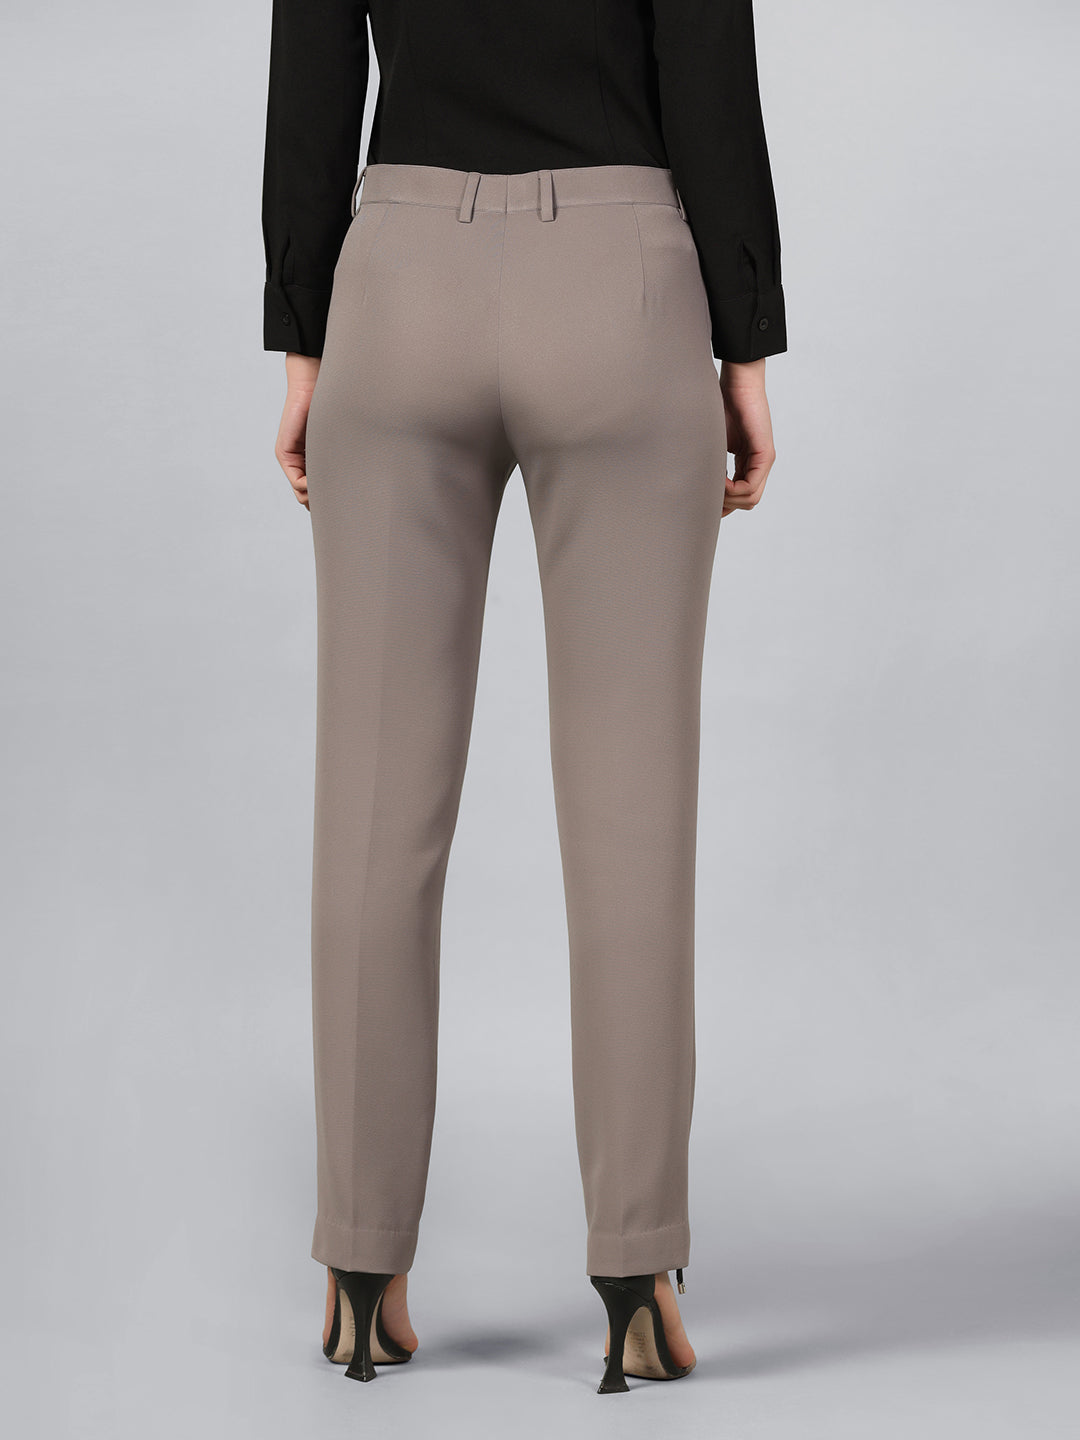 Grey Viscose Stretch Pants